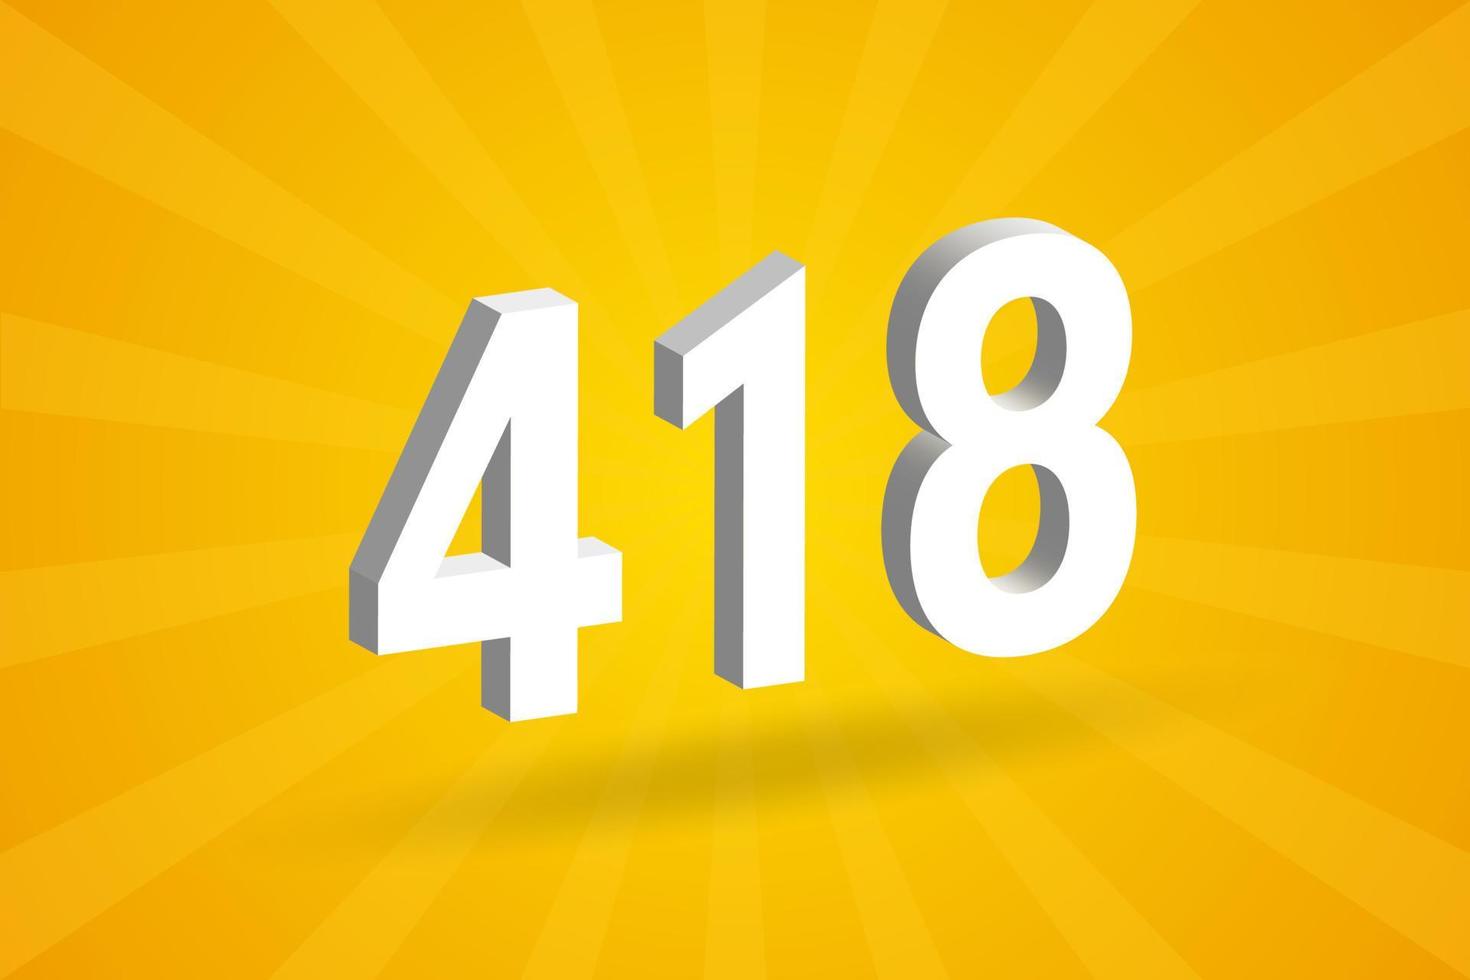 3d 418 siffra font alfabet. vit 3d siffra 418 med gul bakgrund vektor